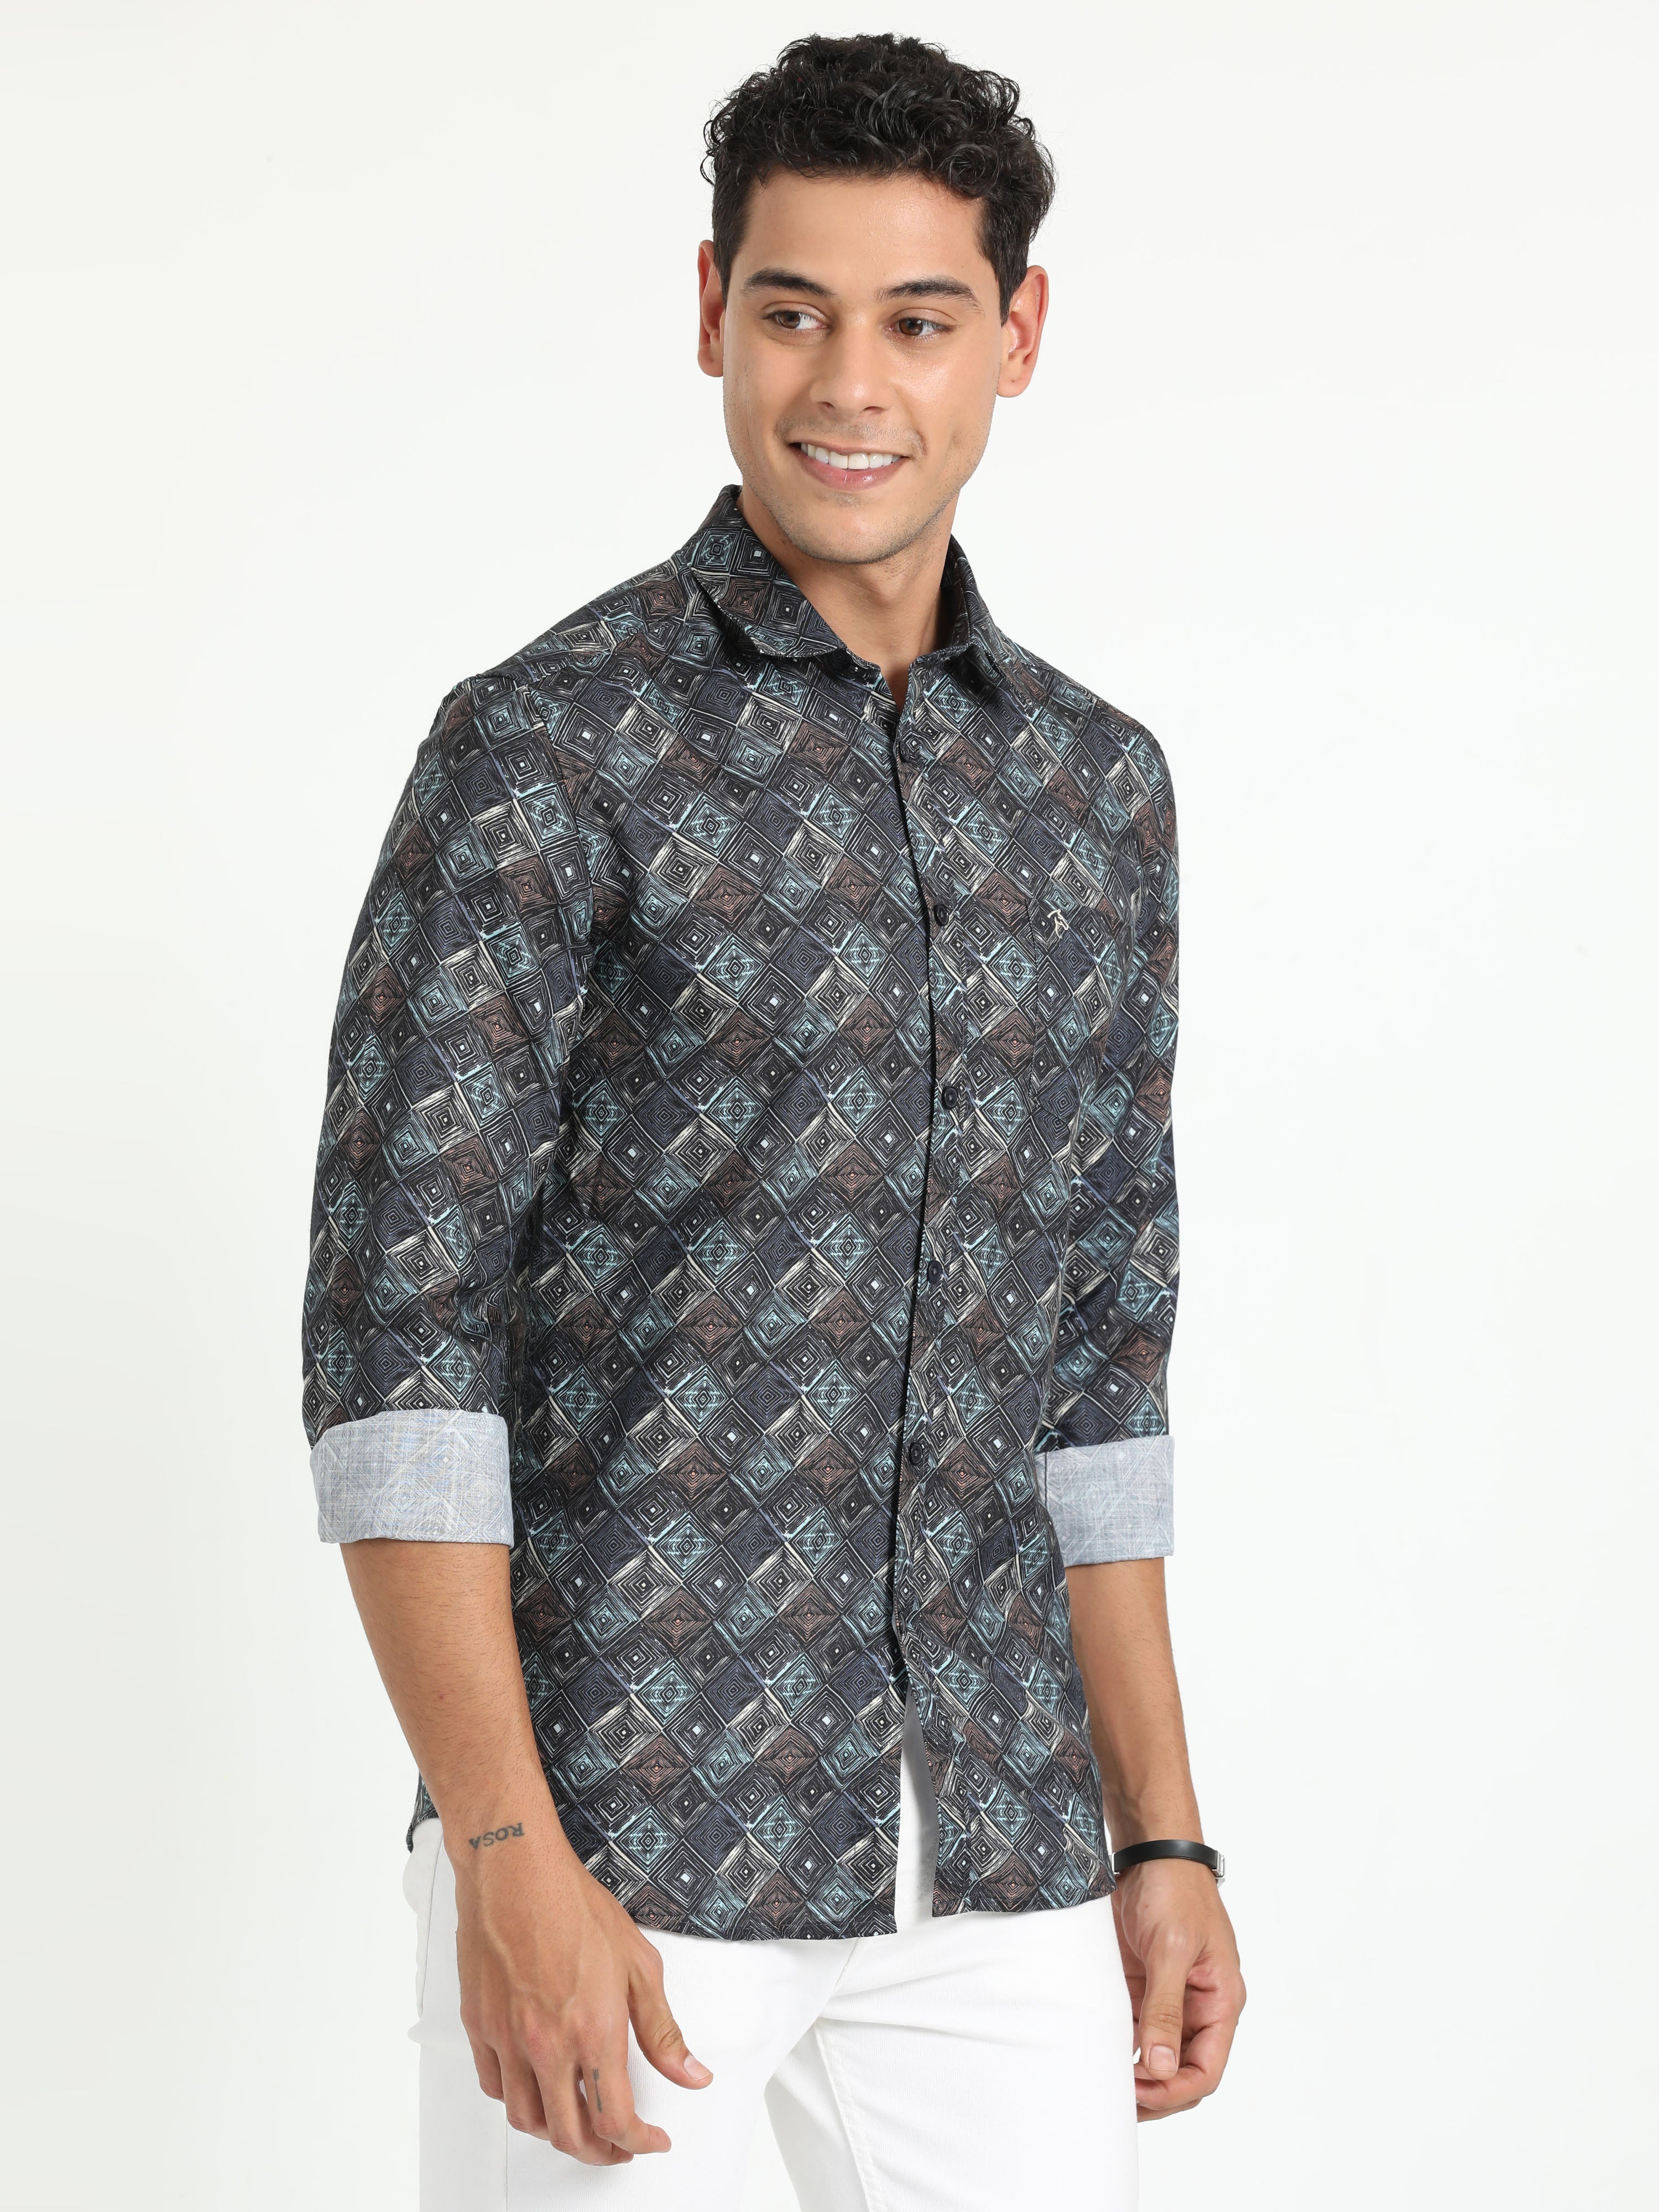 Cp Bro Men's Printed Multi Cotton Full Sleeve Woven Shirt | SBO2-94 A-FS-PRT-BSL